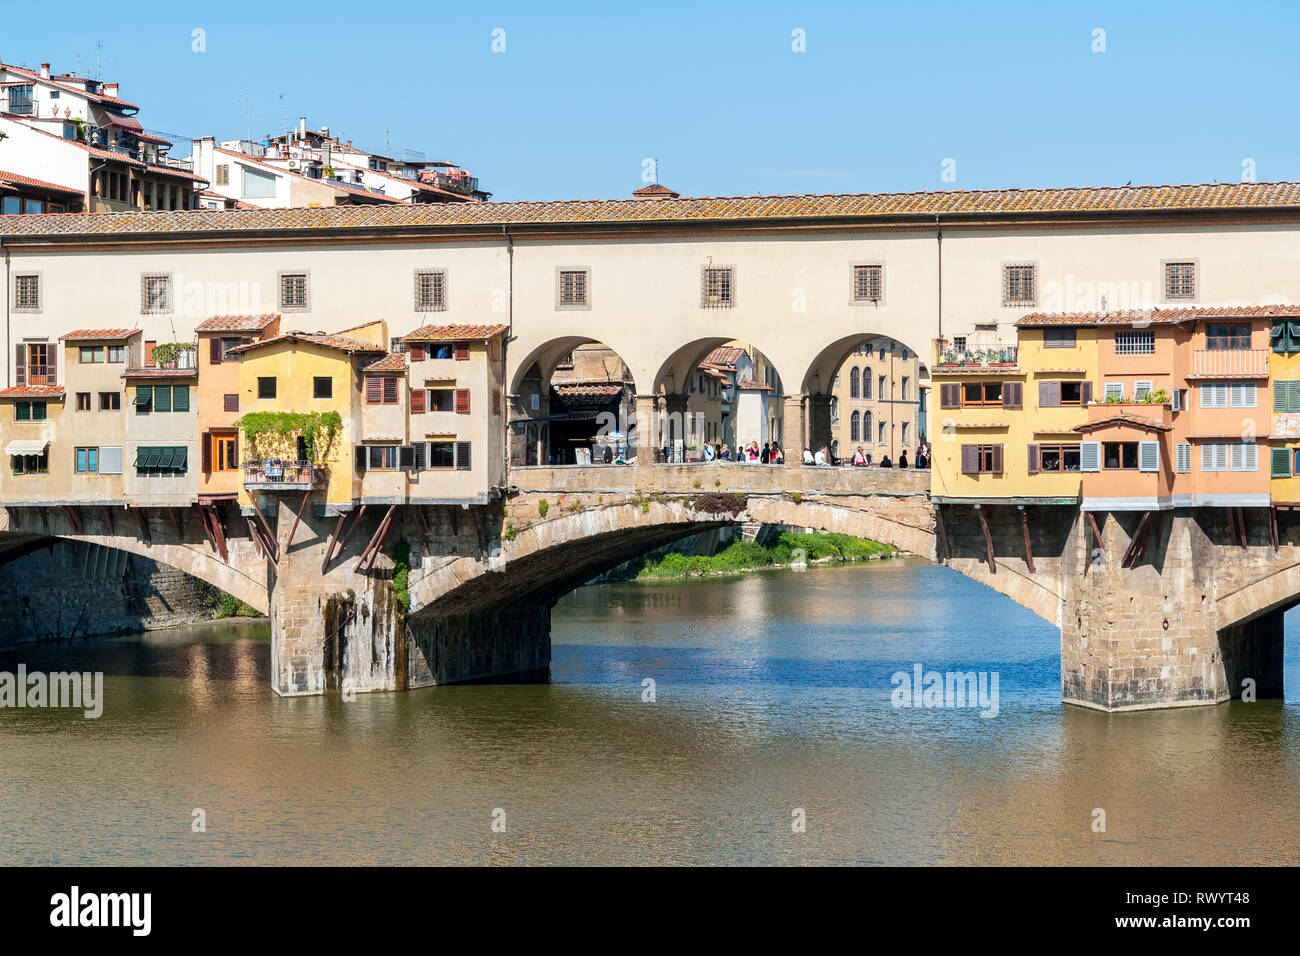 Closeup of Ponte Vecchio old bridge over river Arno - Florence, Italy Stock Photo